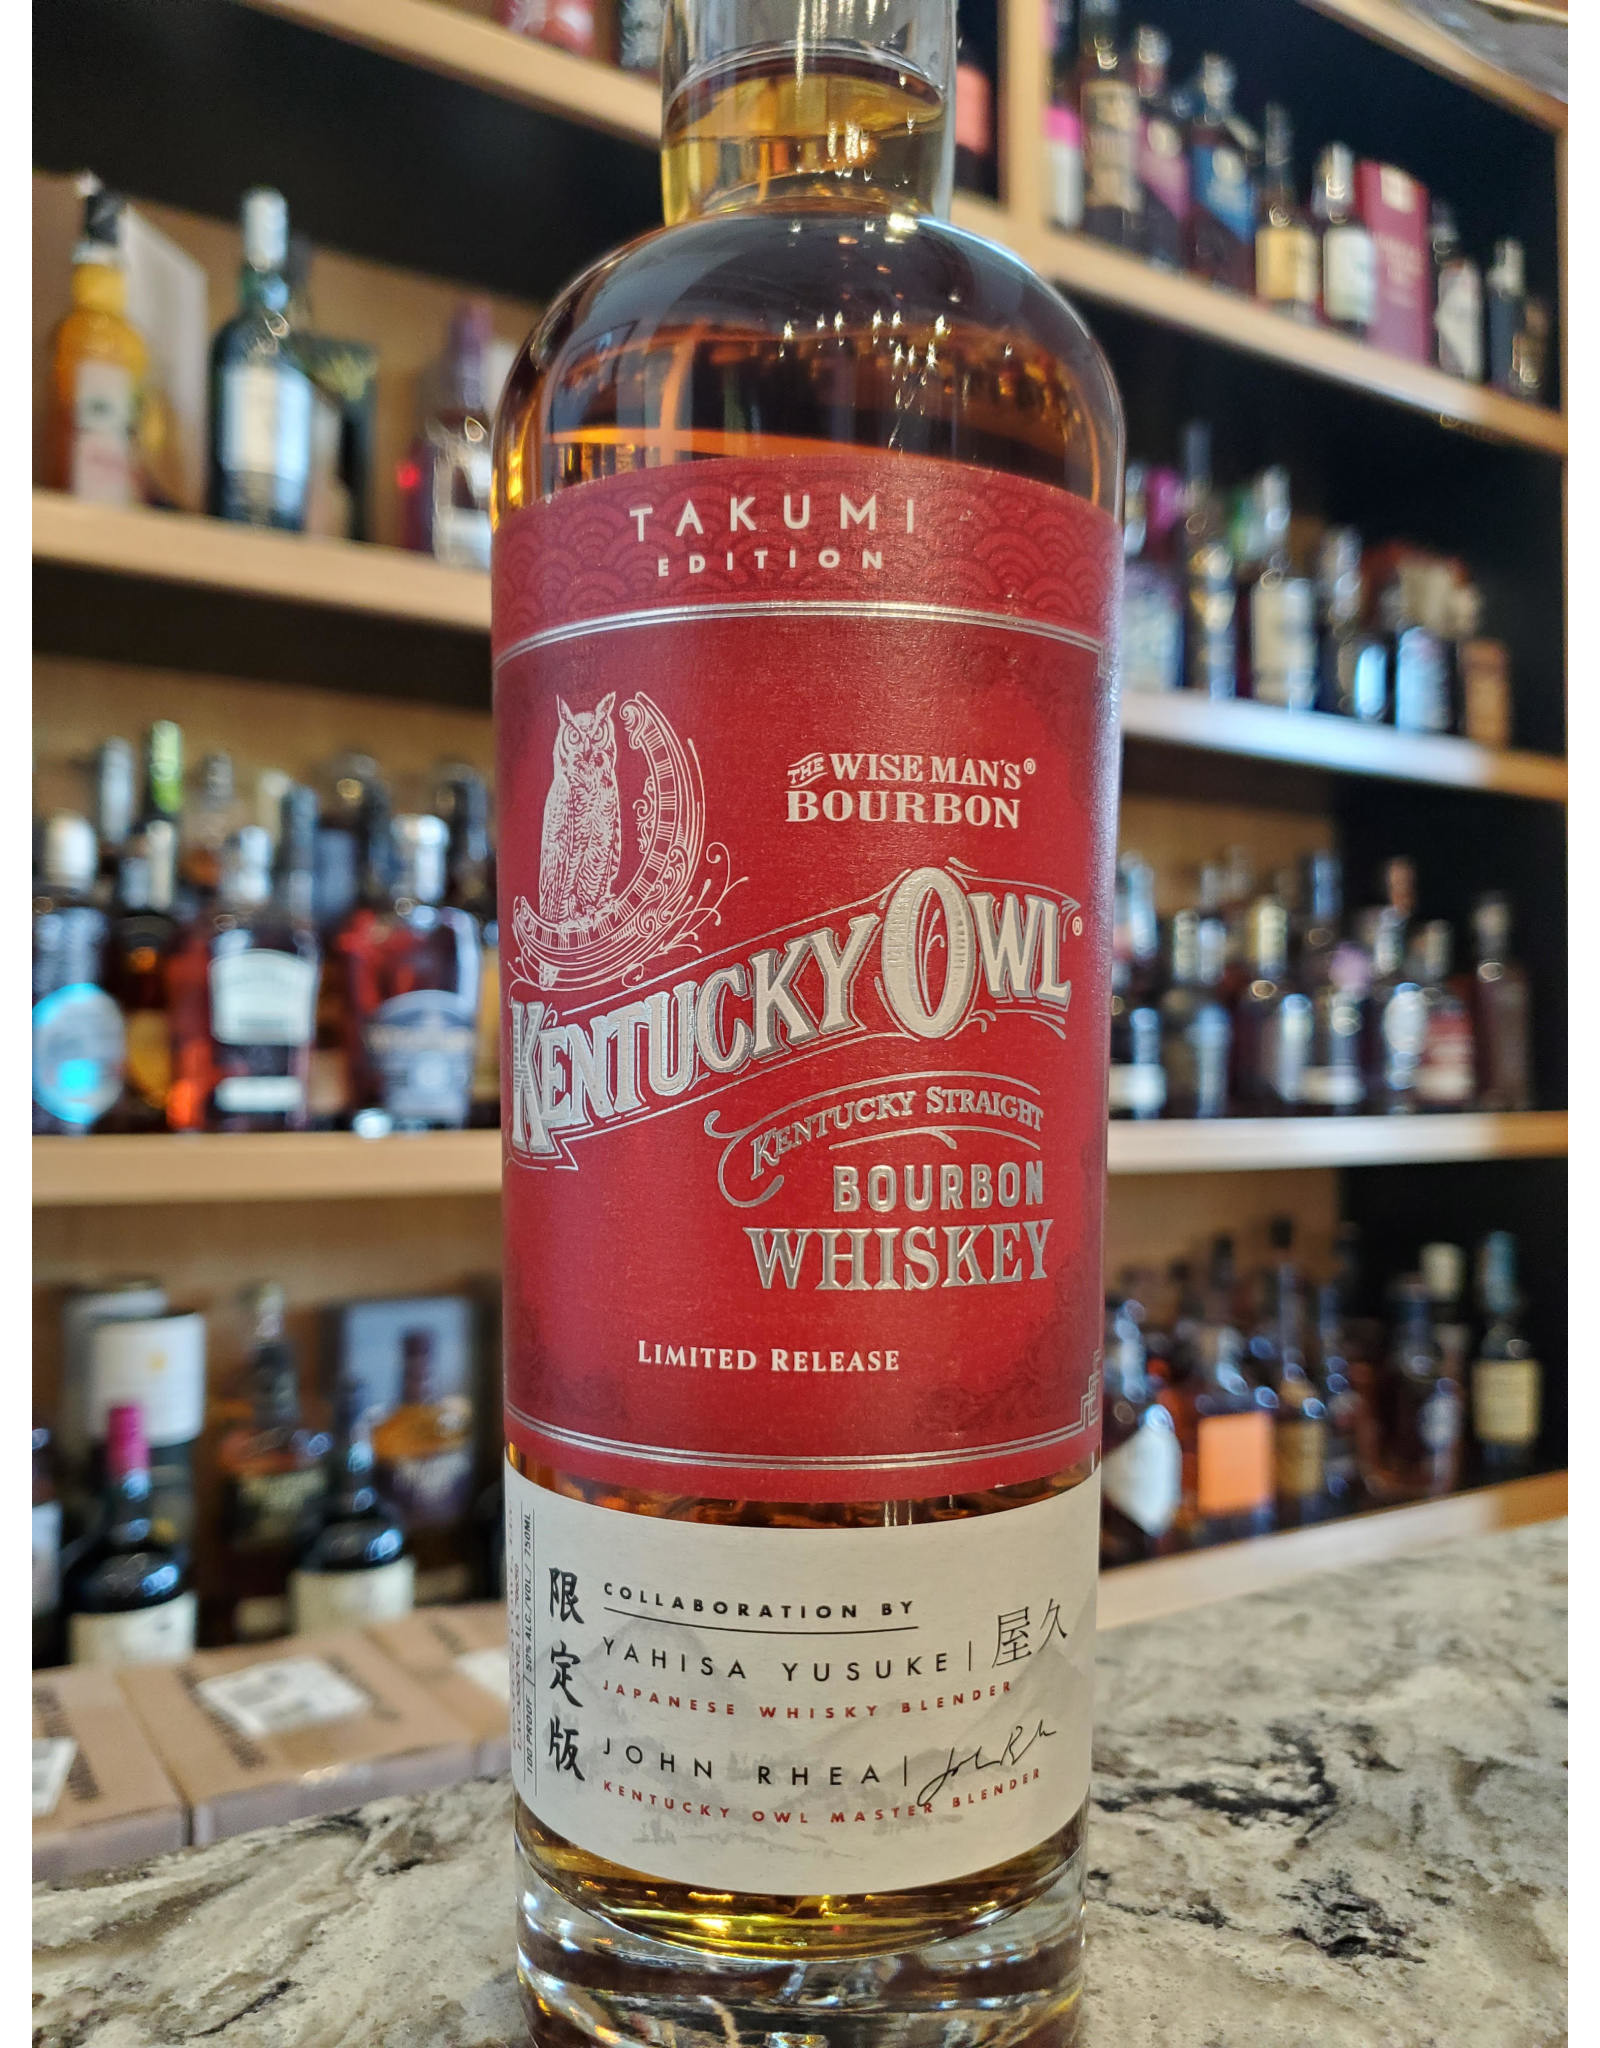 Kentucky Owl, Bourbon, Takumi Edition